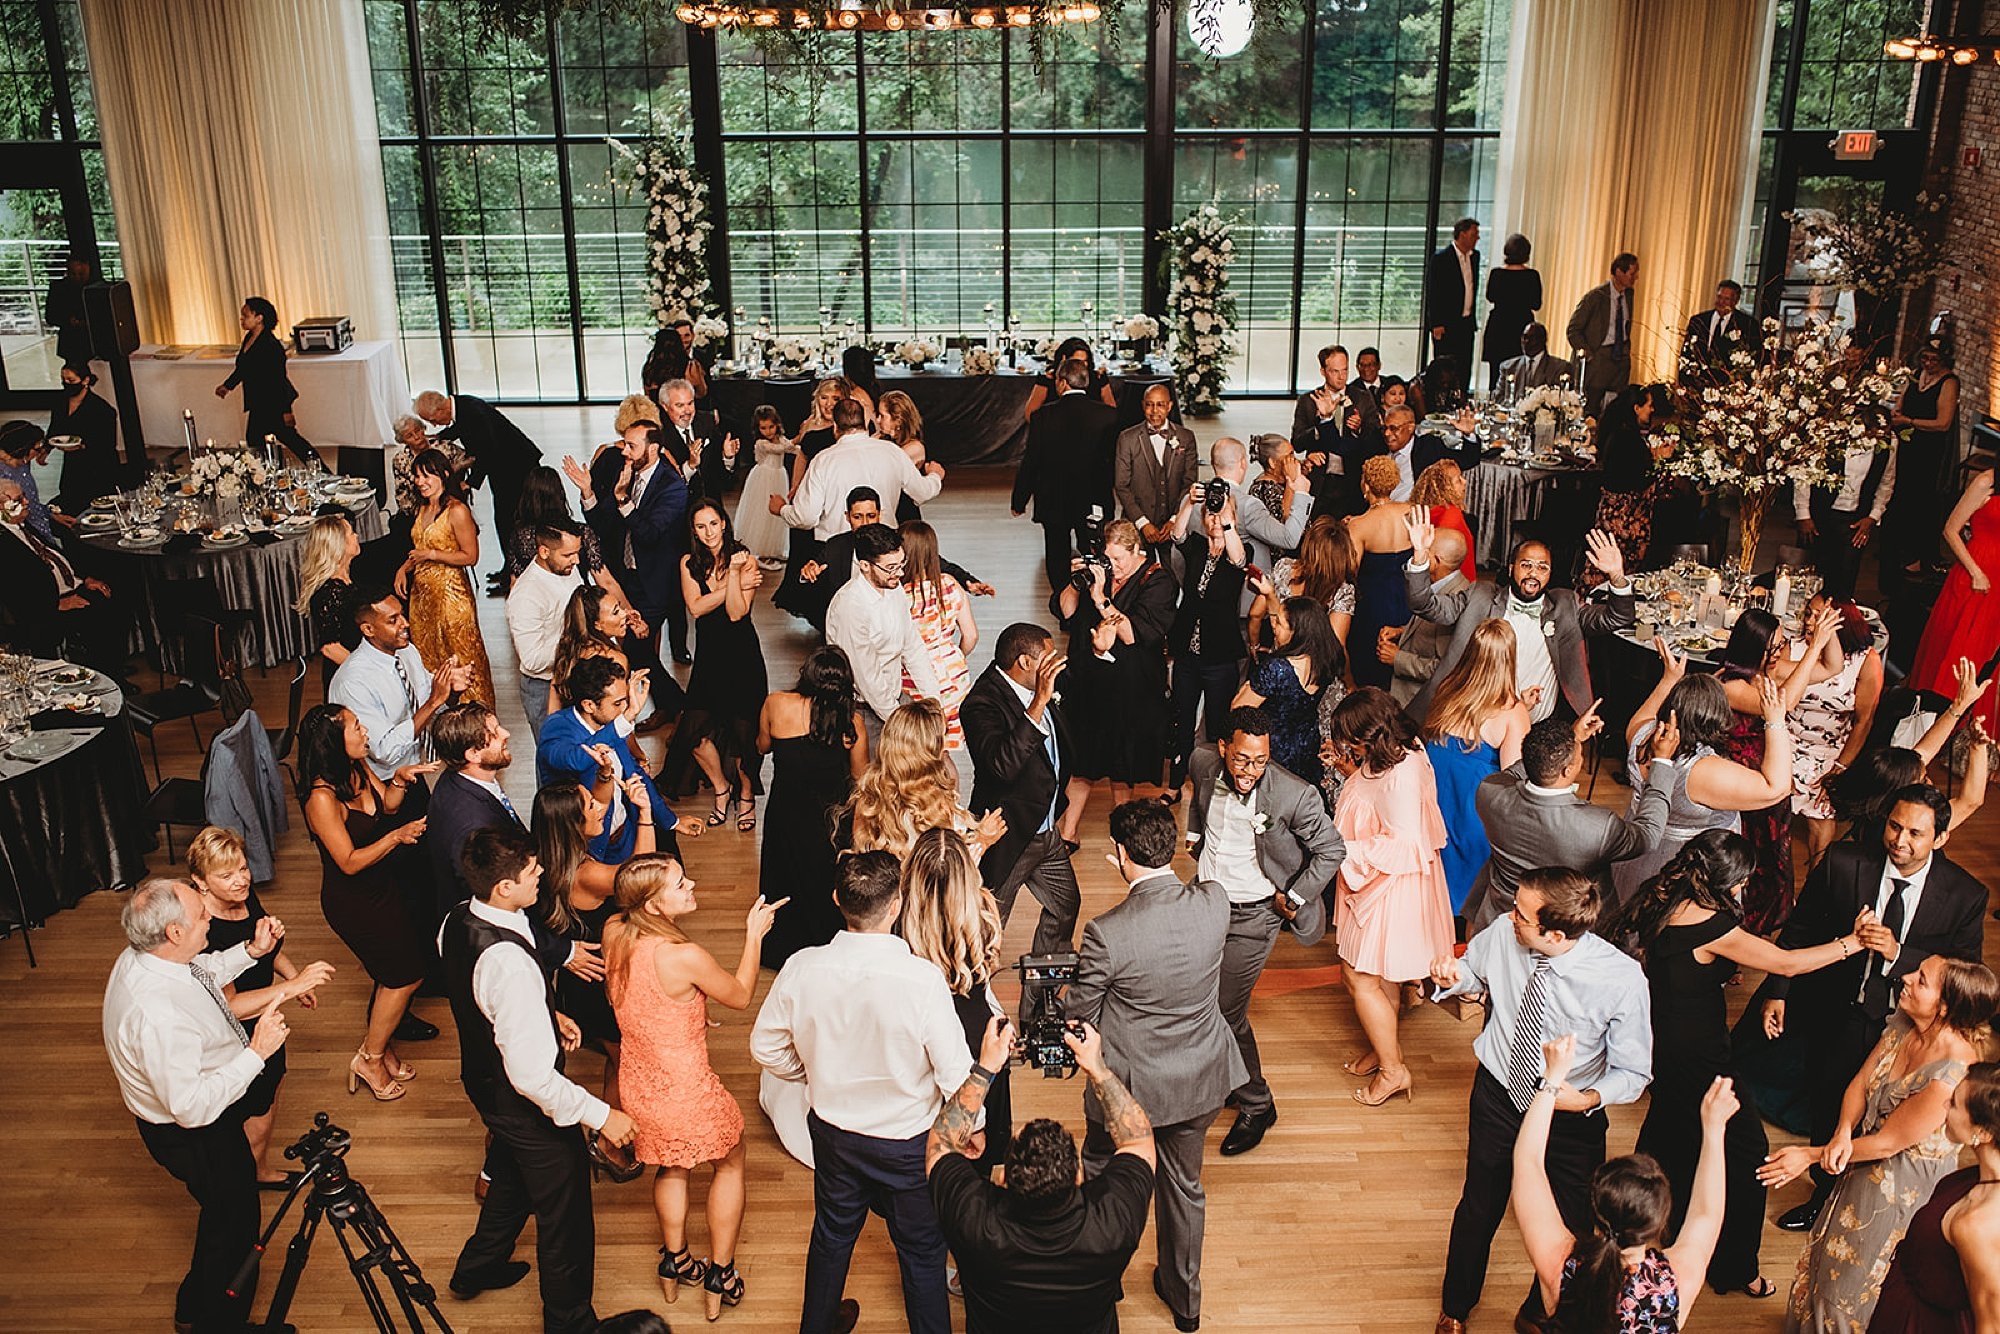 Beacon NY wedding reception dance floor